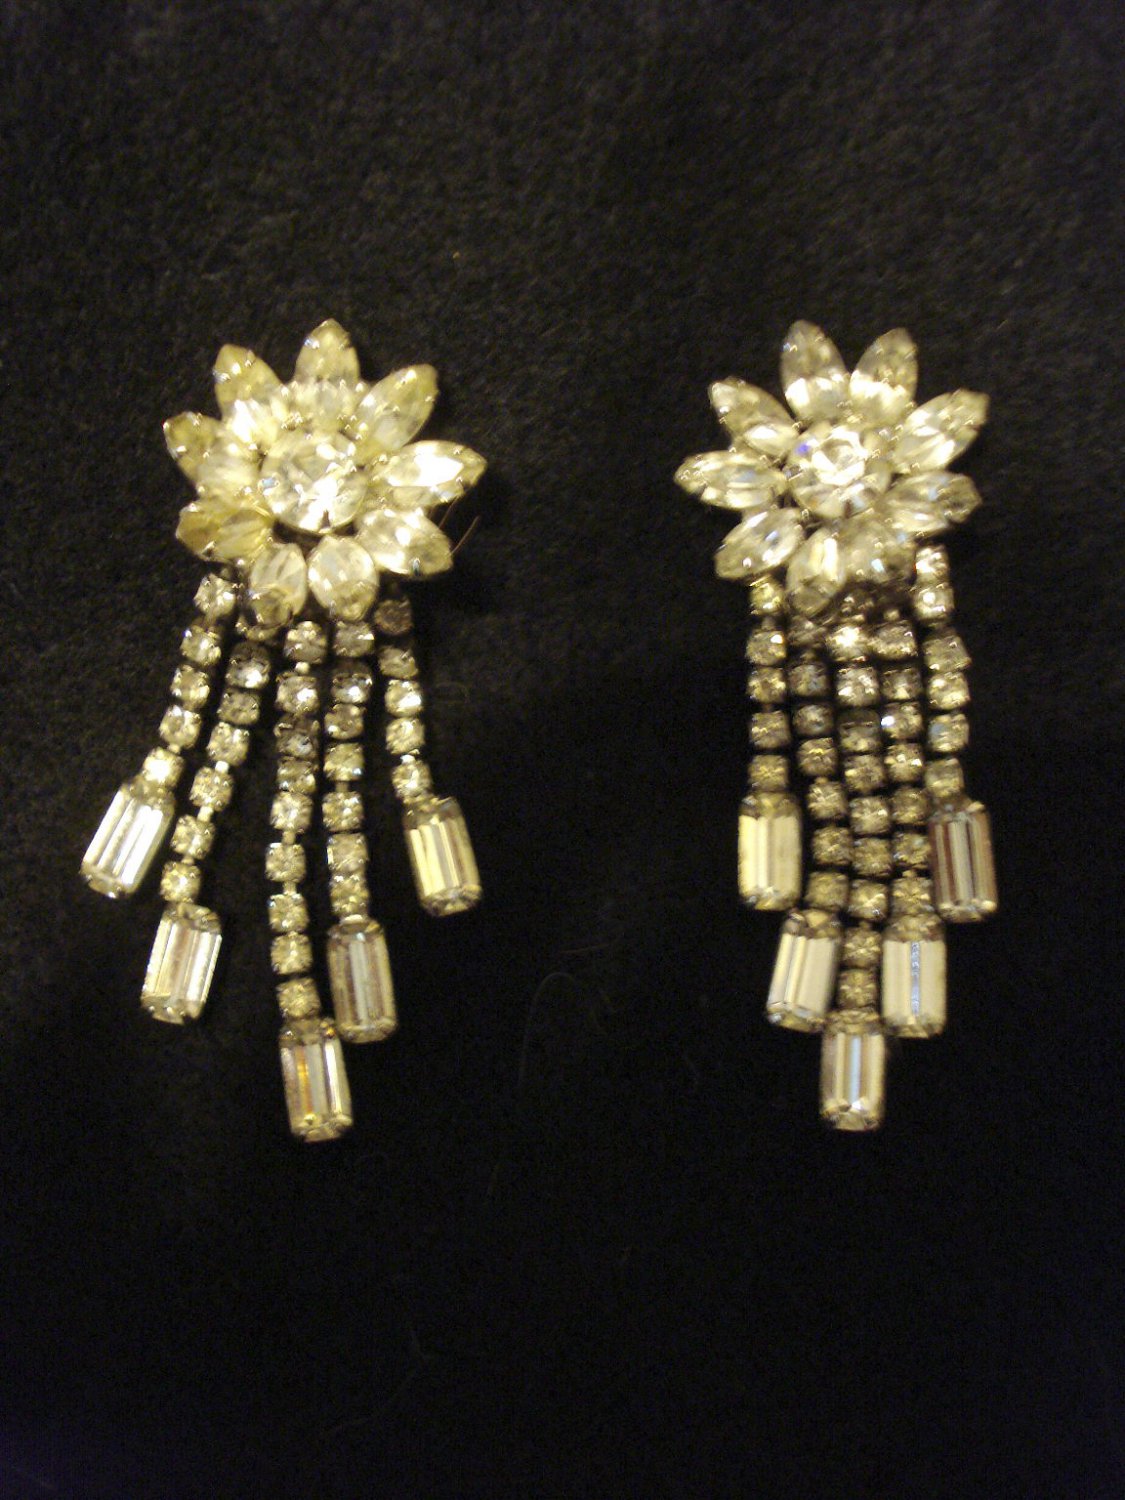 Beautiful Vintage Rhinestone Vintage Earrings, 3" Long, Flower and Dangle Style, Clip on